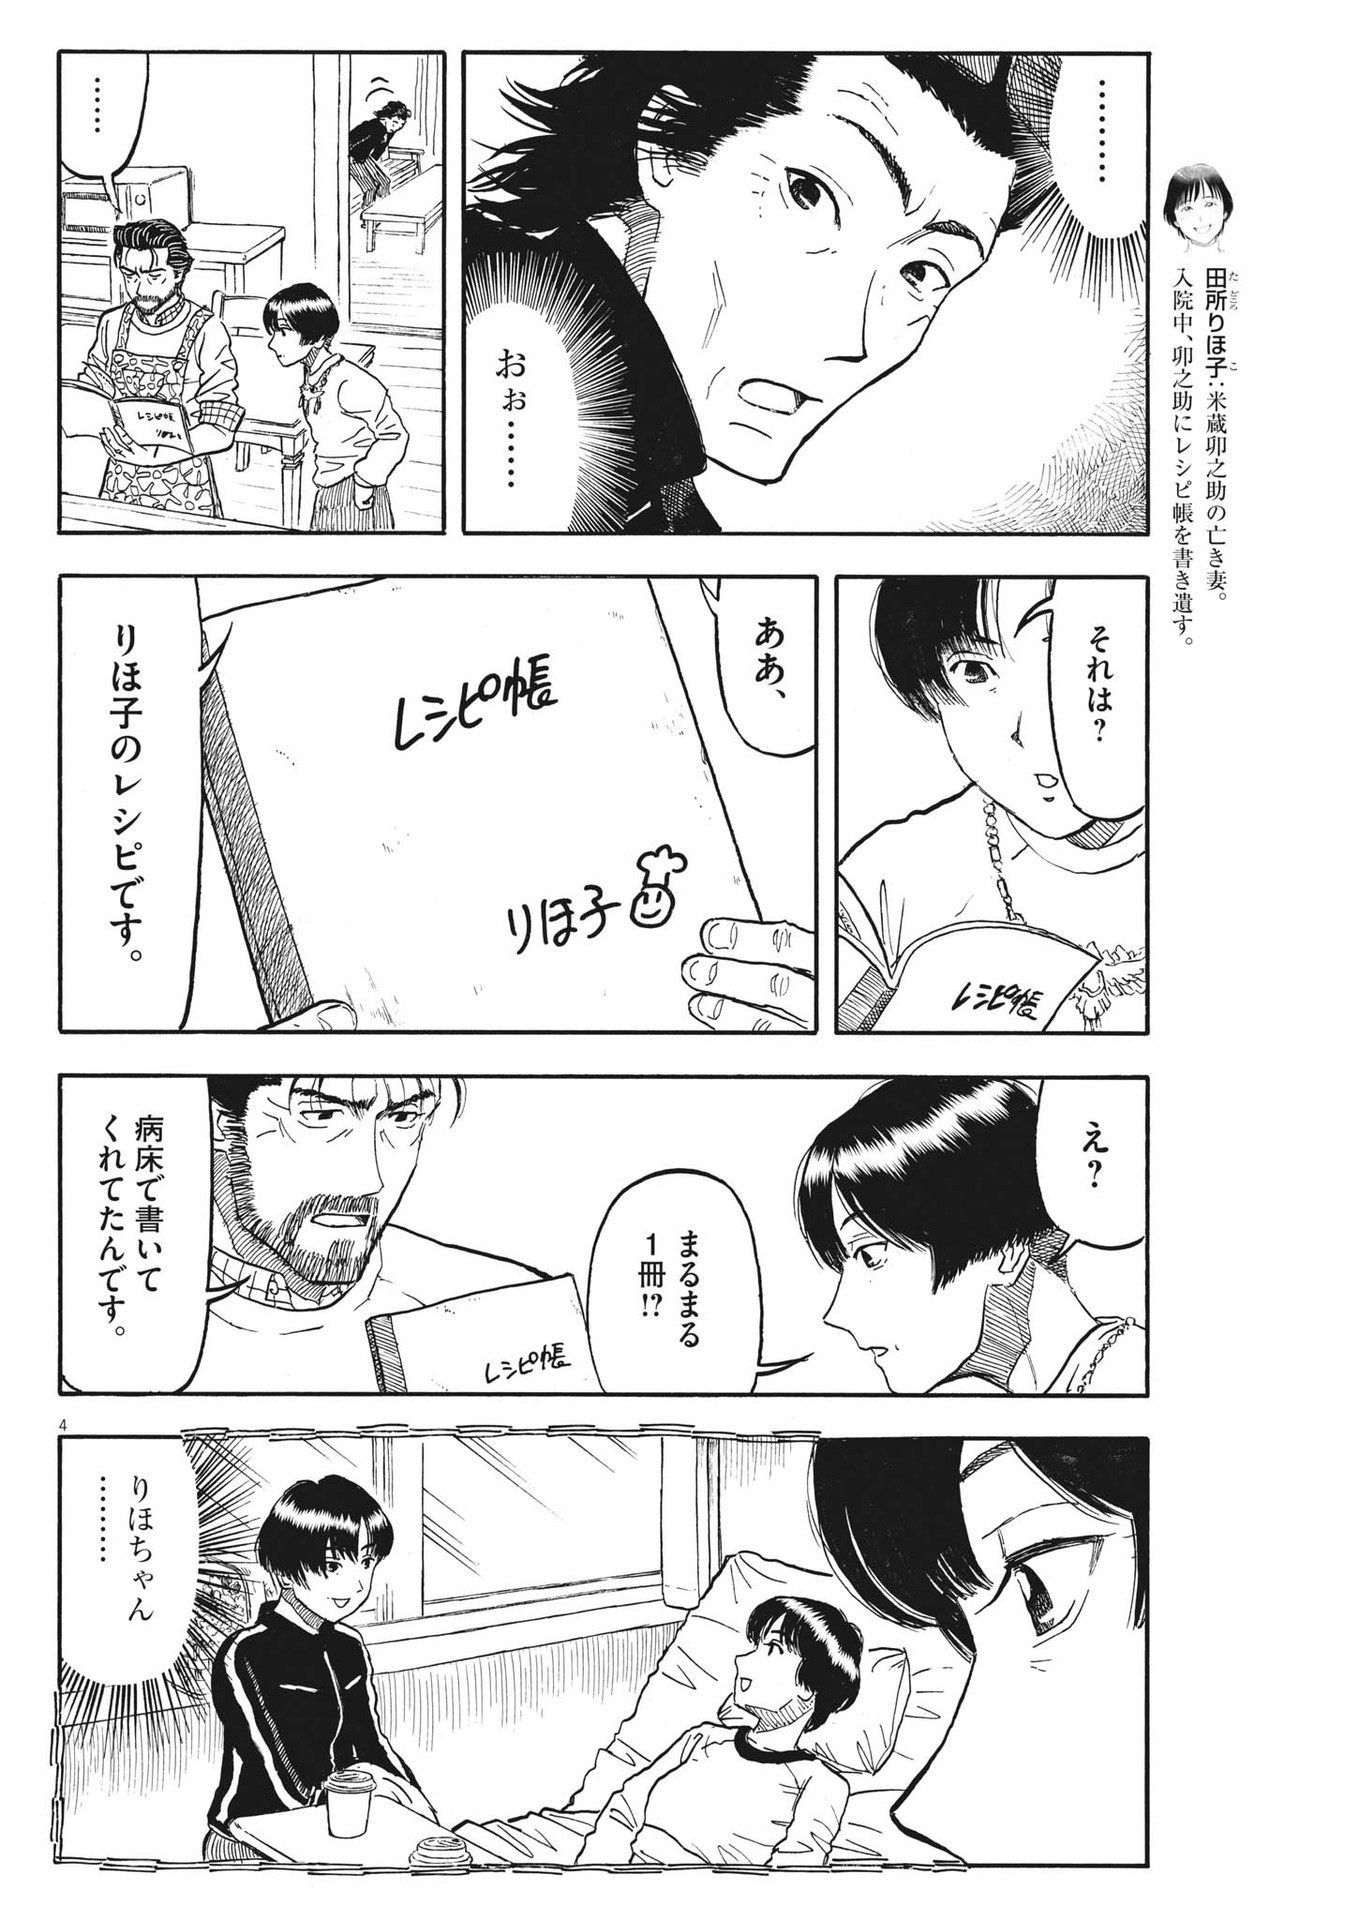 Komegura Fuufu no Recipe-chou - Chapter 32 - Page 4